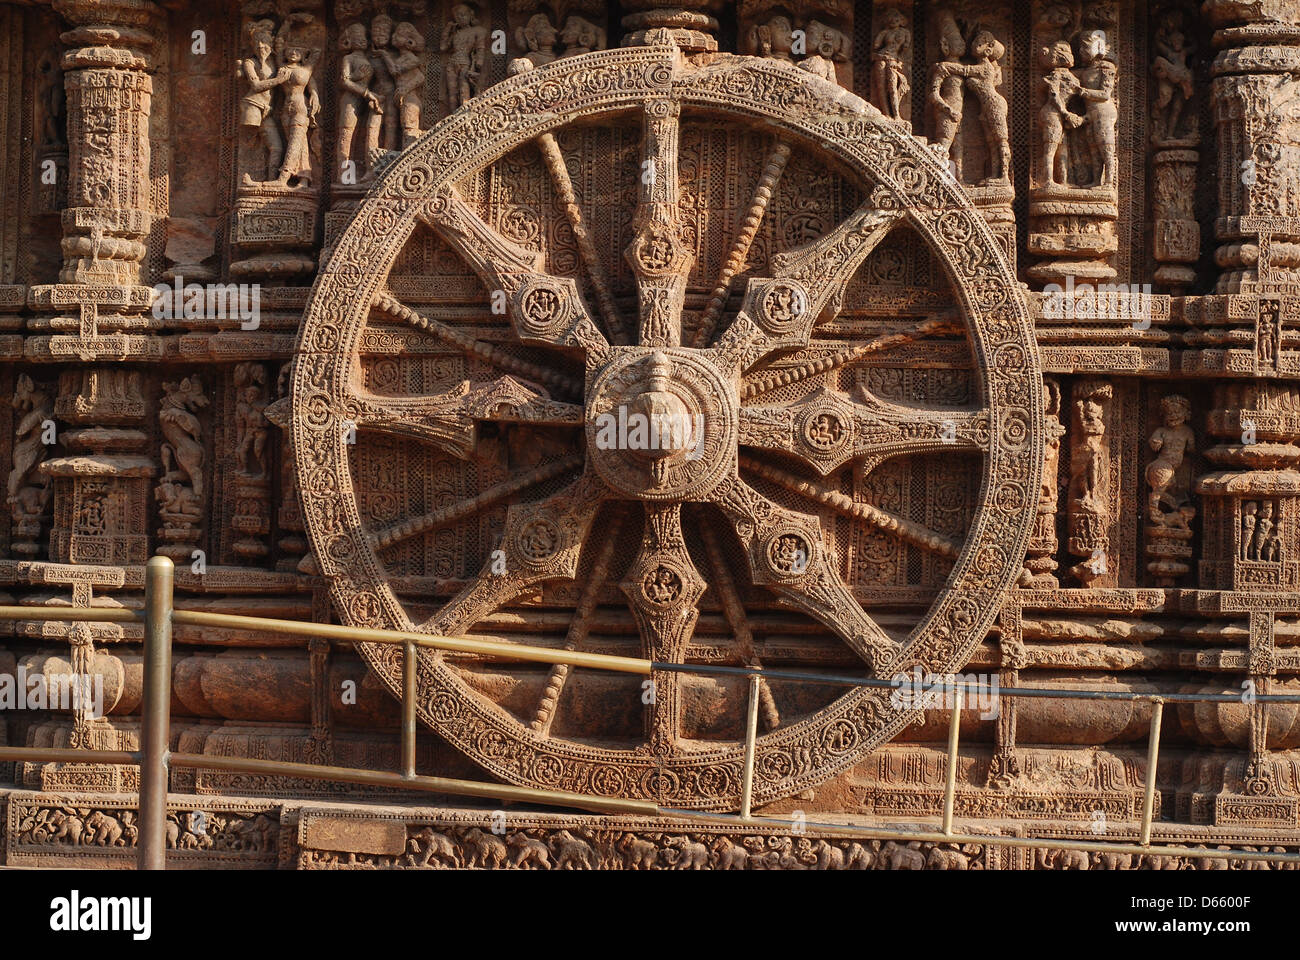 konark sun temple,orissa,india . this stone carved stone wheel represents chariot of sun god. Stock Photo